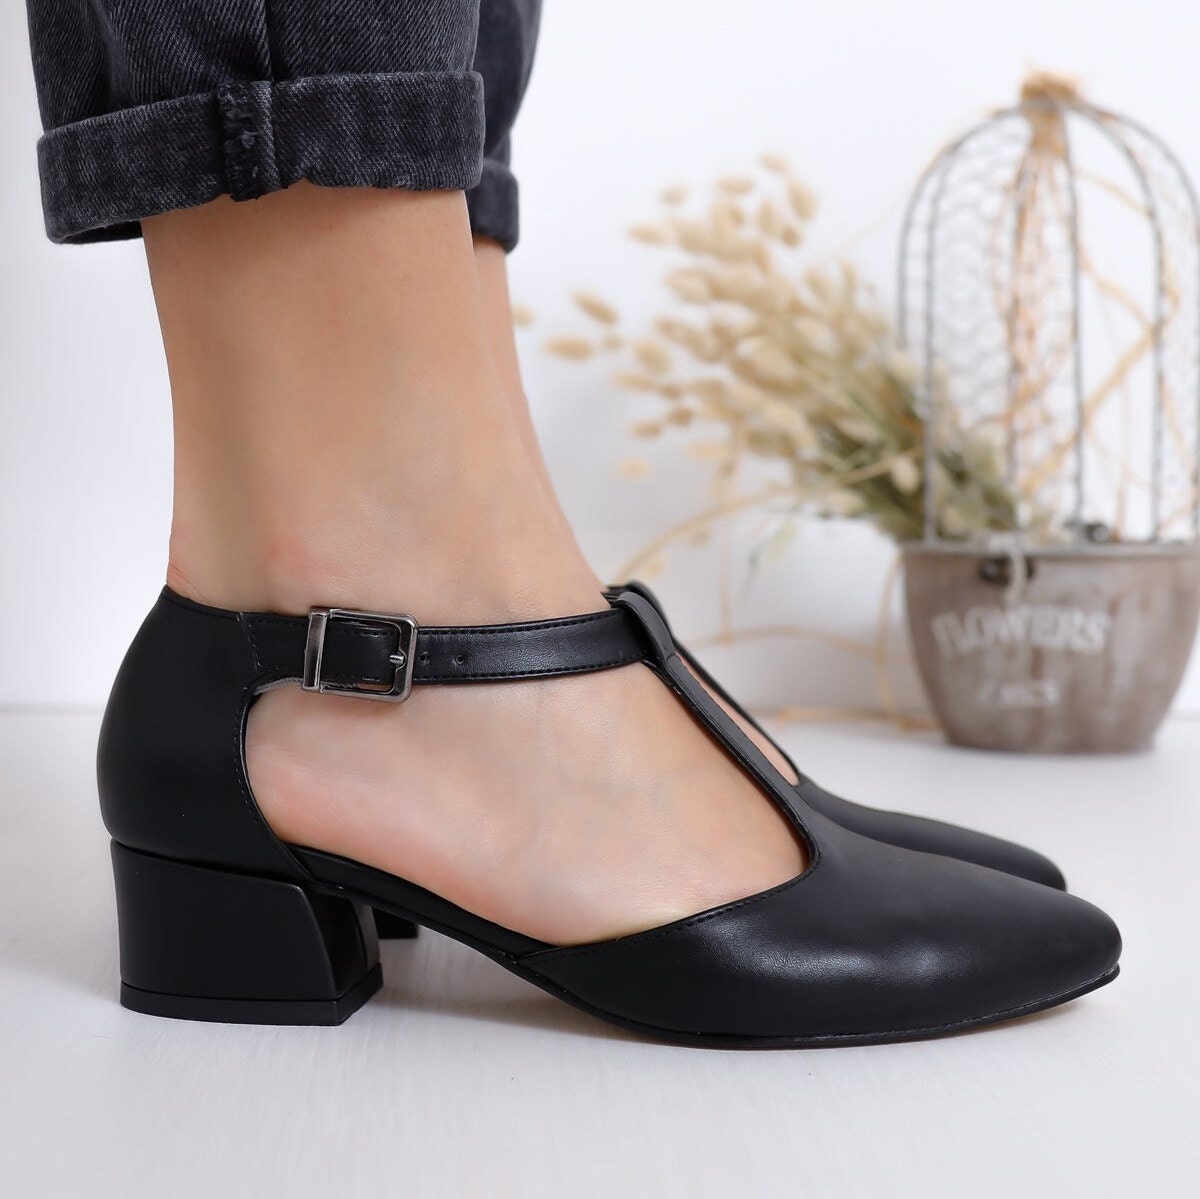 Classic T-Strap Leather Shoes - Handmade, Vegan Leather, 5 cm Heel